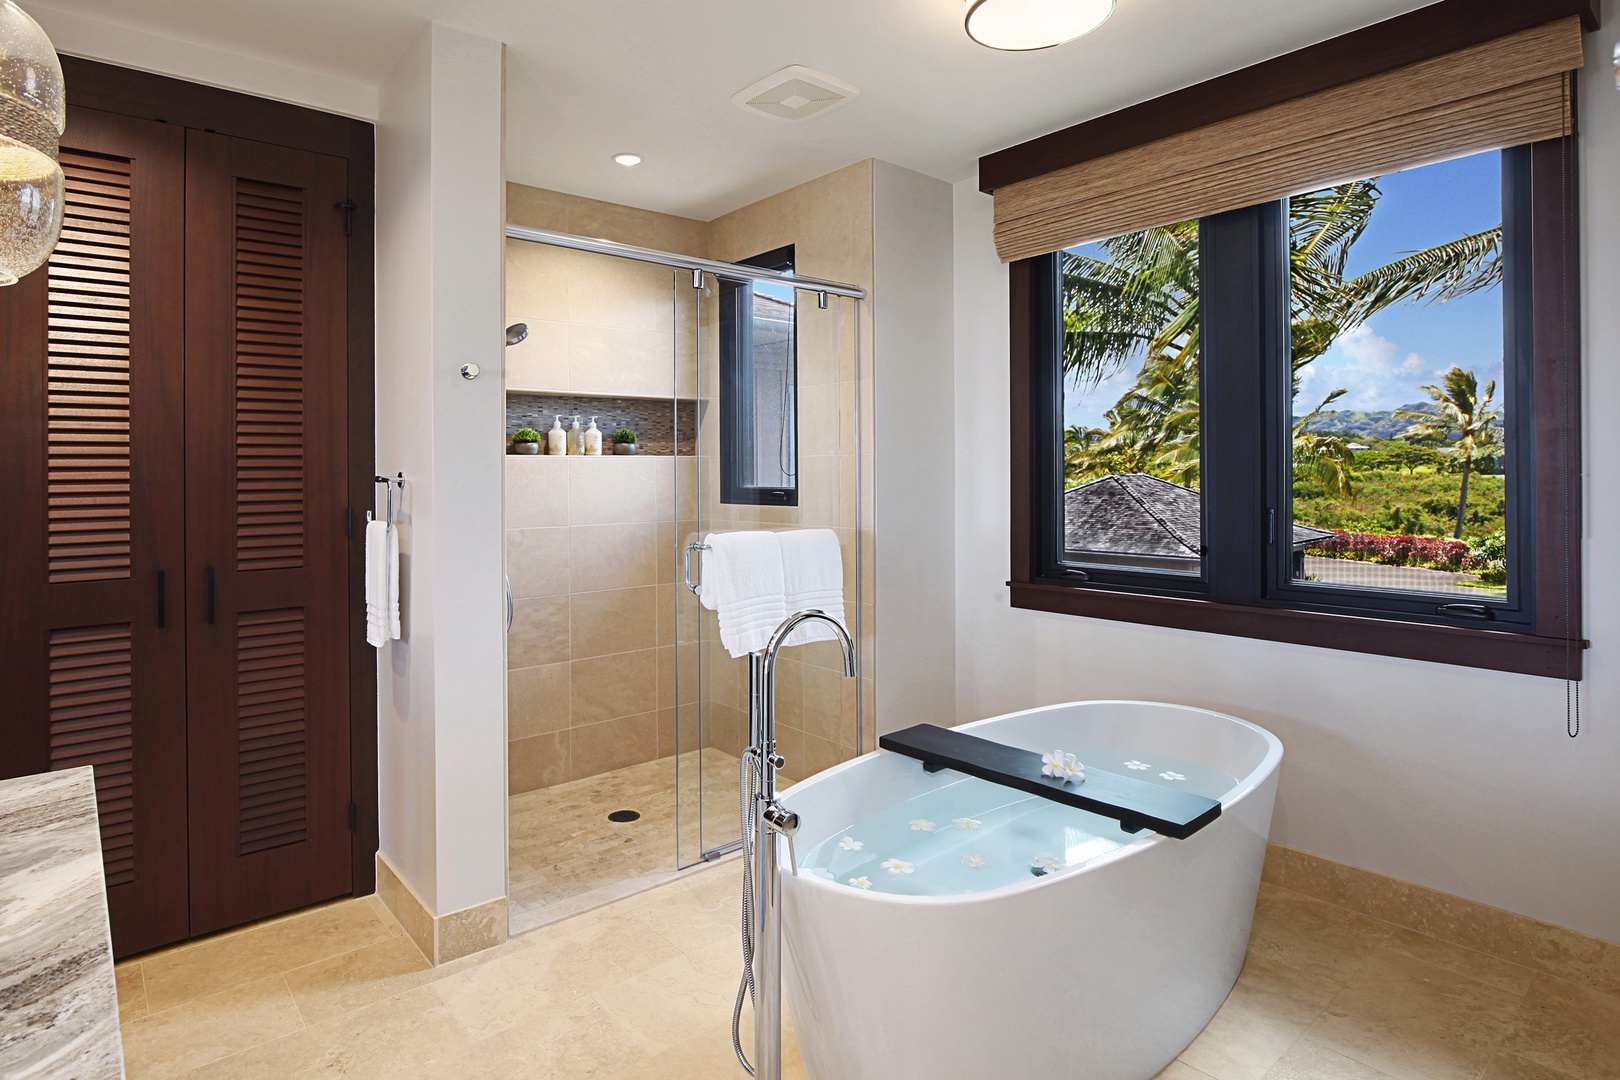 Koloa Vacation Rentals, Kukui'ula Villa #8 - Primary bathroom soaking tub and walk-in shower